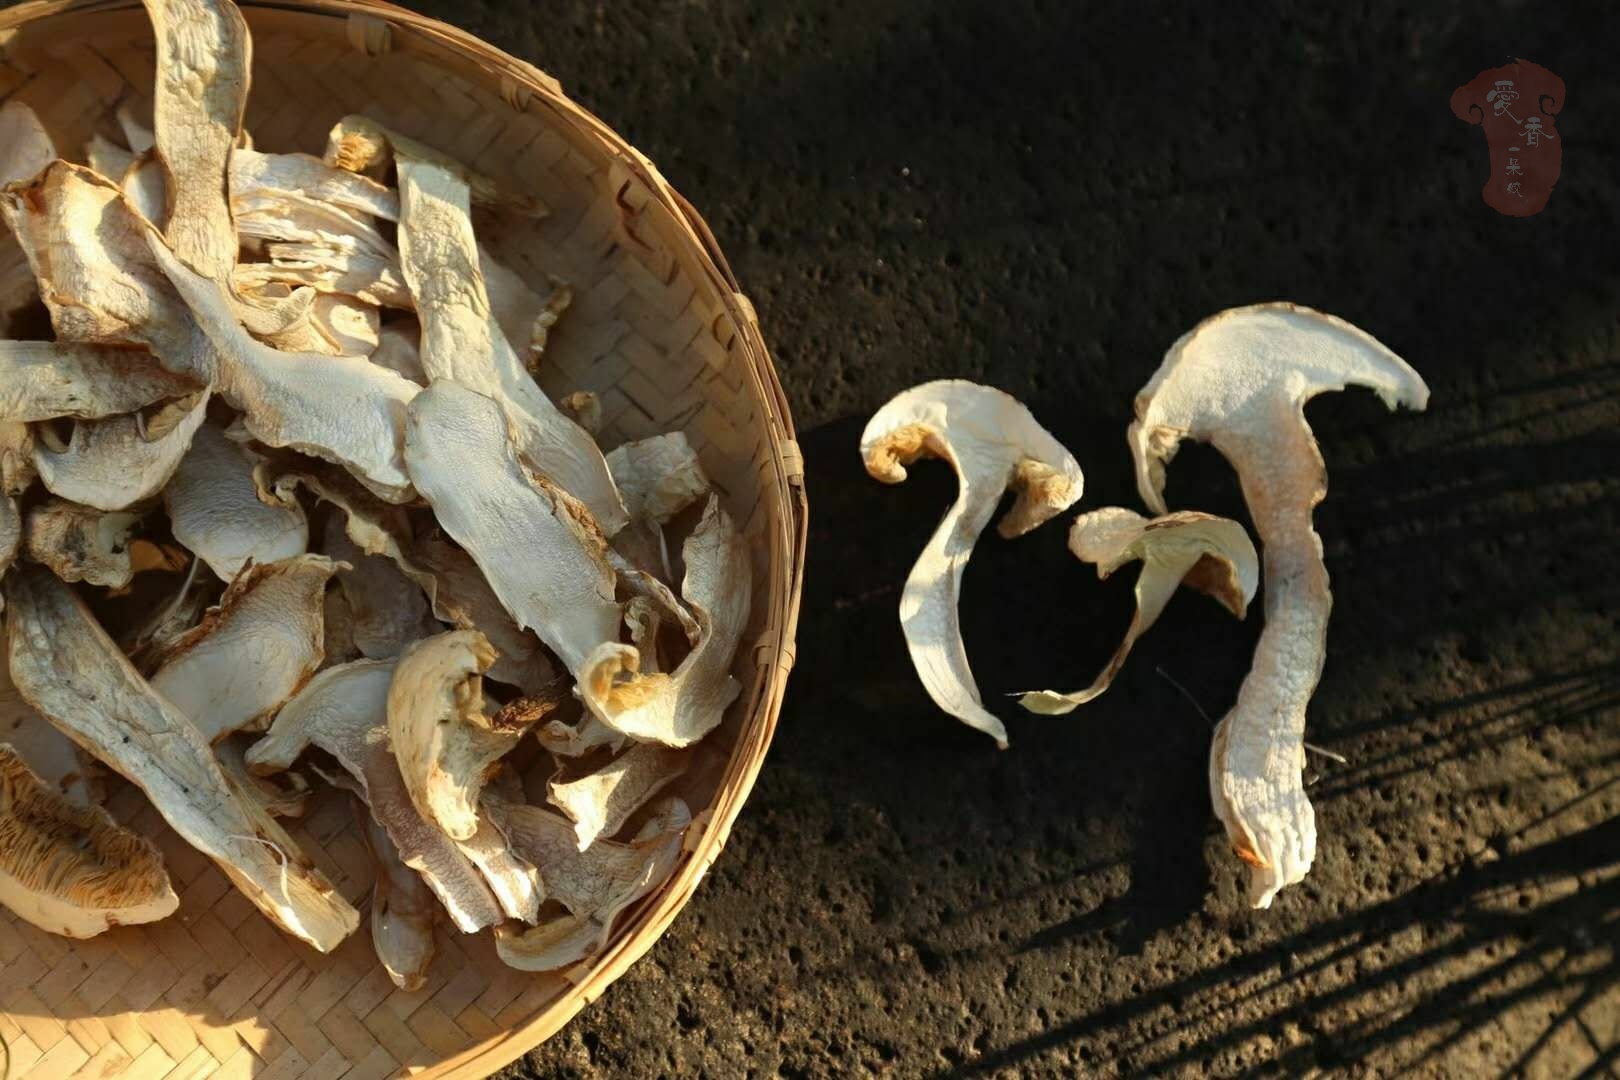 Yunnan Wild Mushroom Matsutake Dried Slices Picture And HD Photos ...